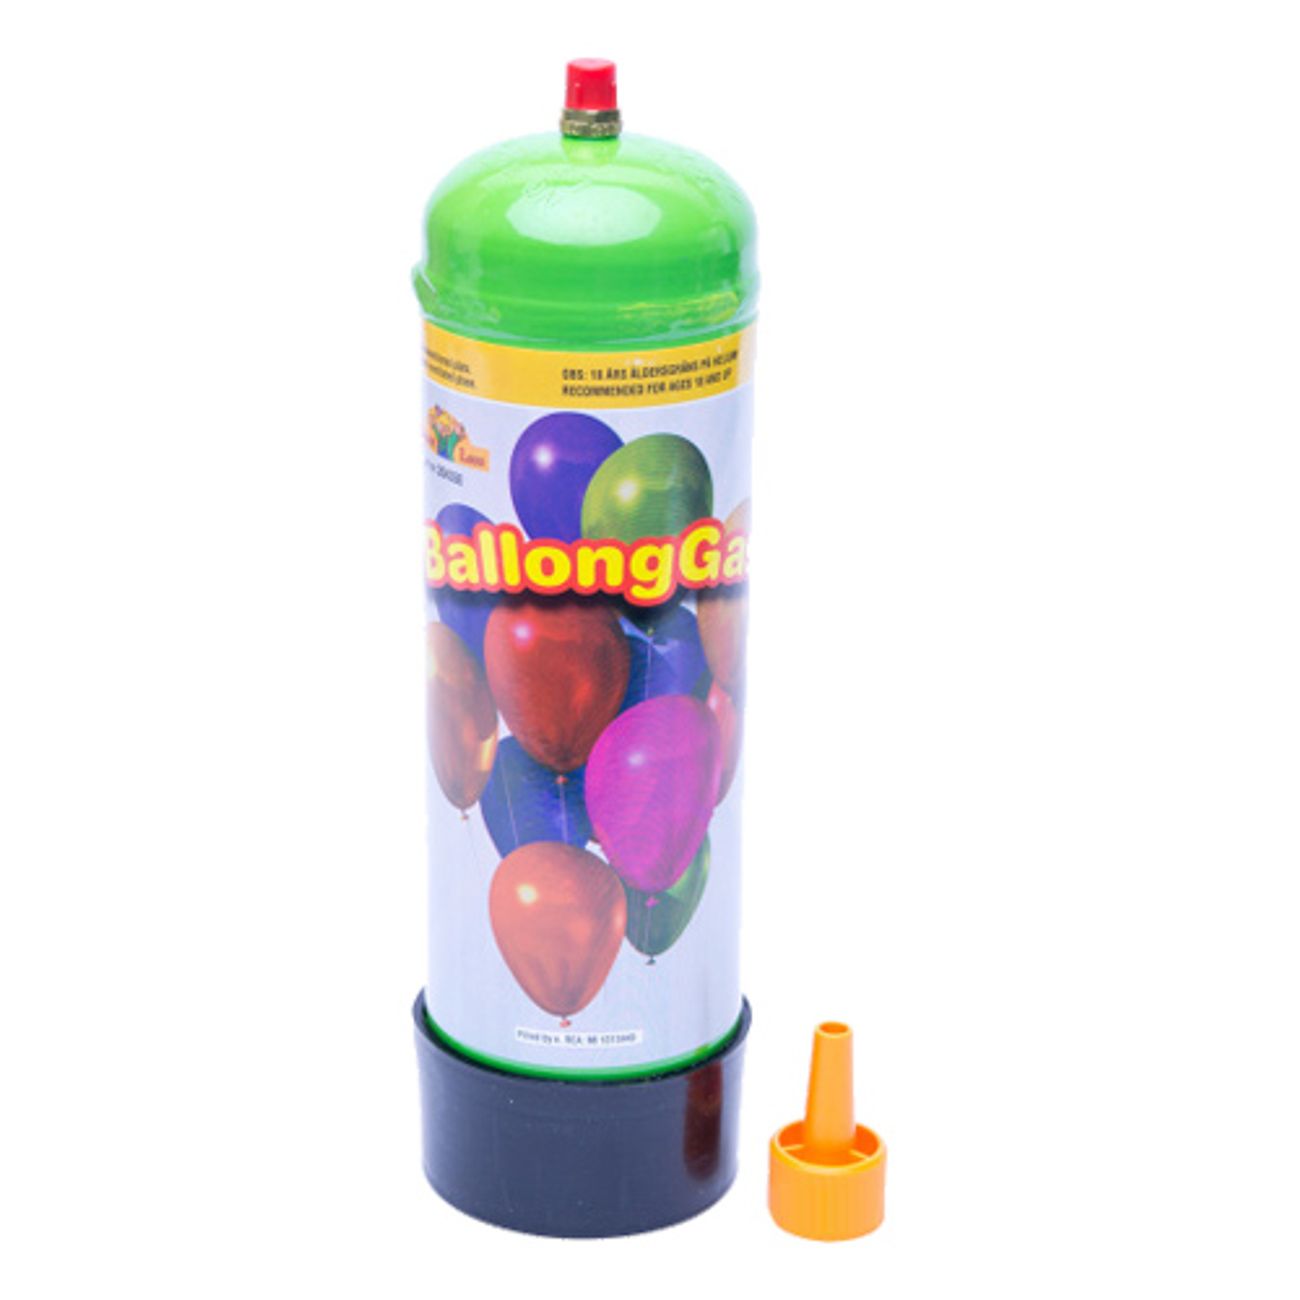 ballonggas-1-liter-1